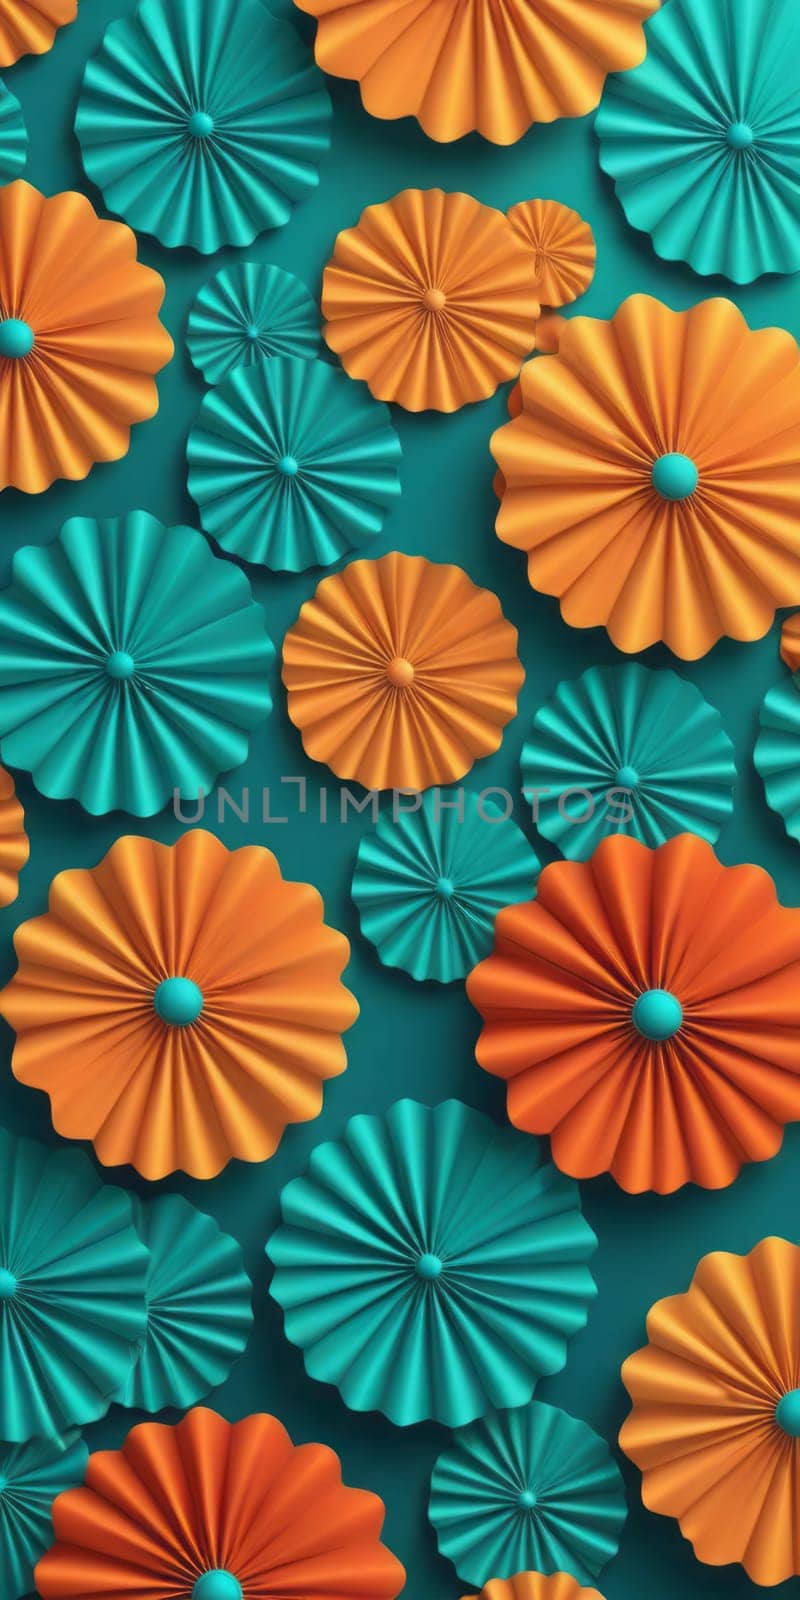 Rosette Shapes in Orange and Aqua by nkotlyar